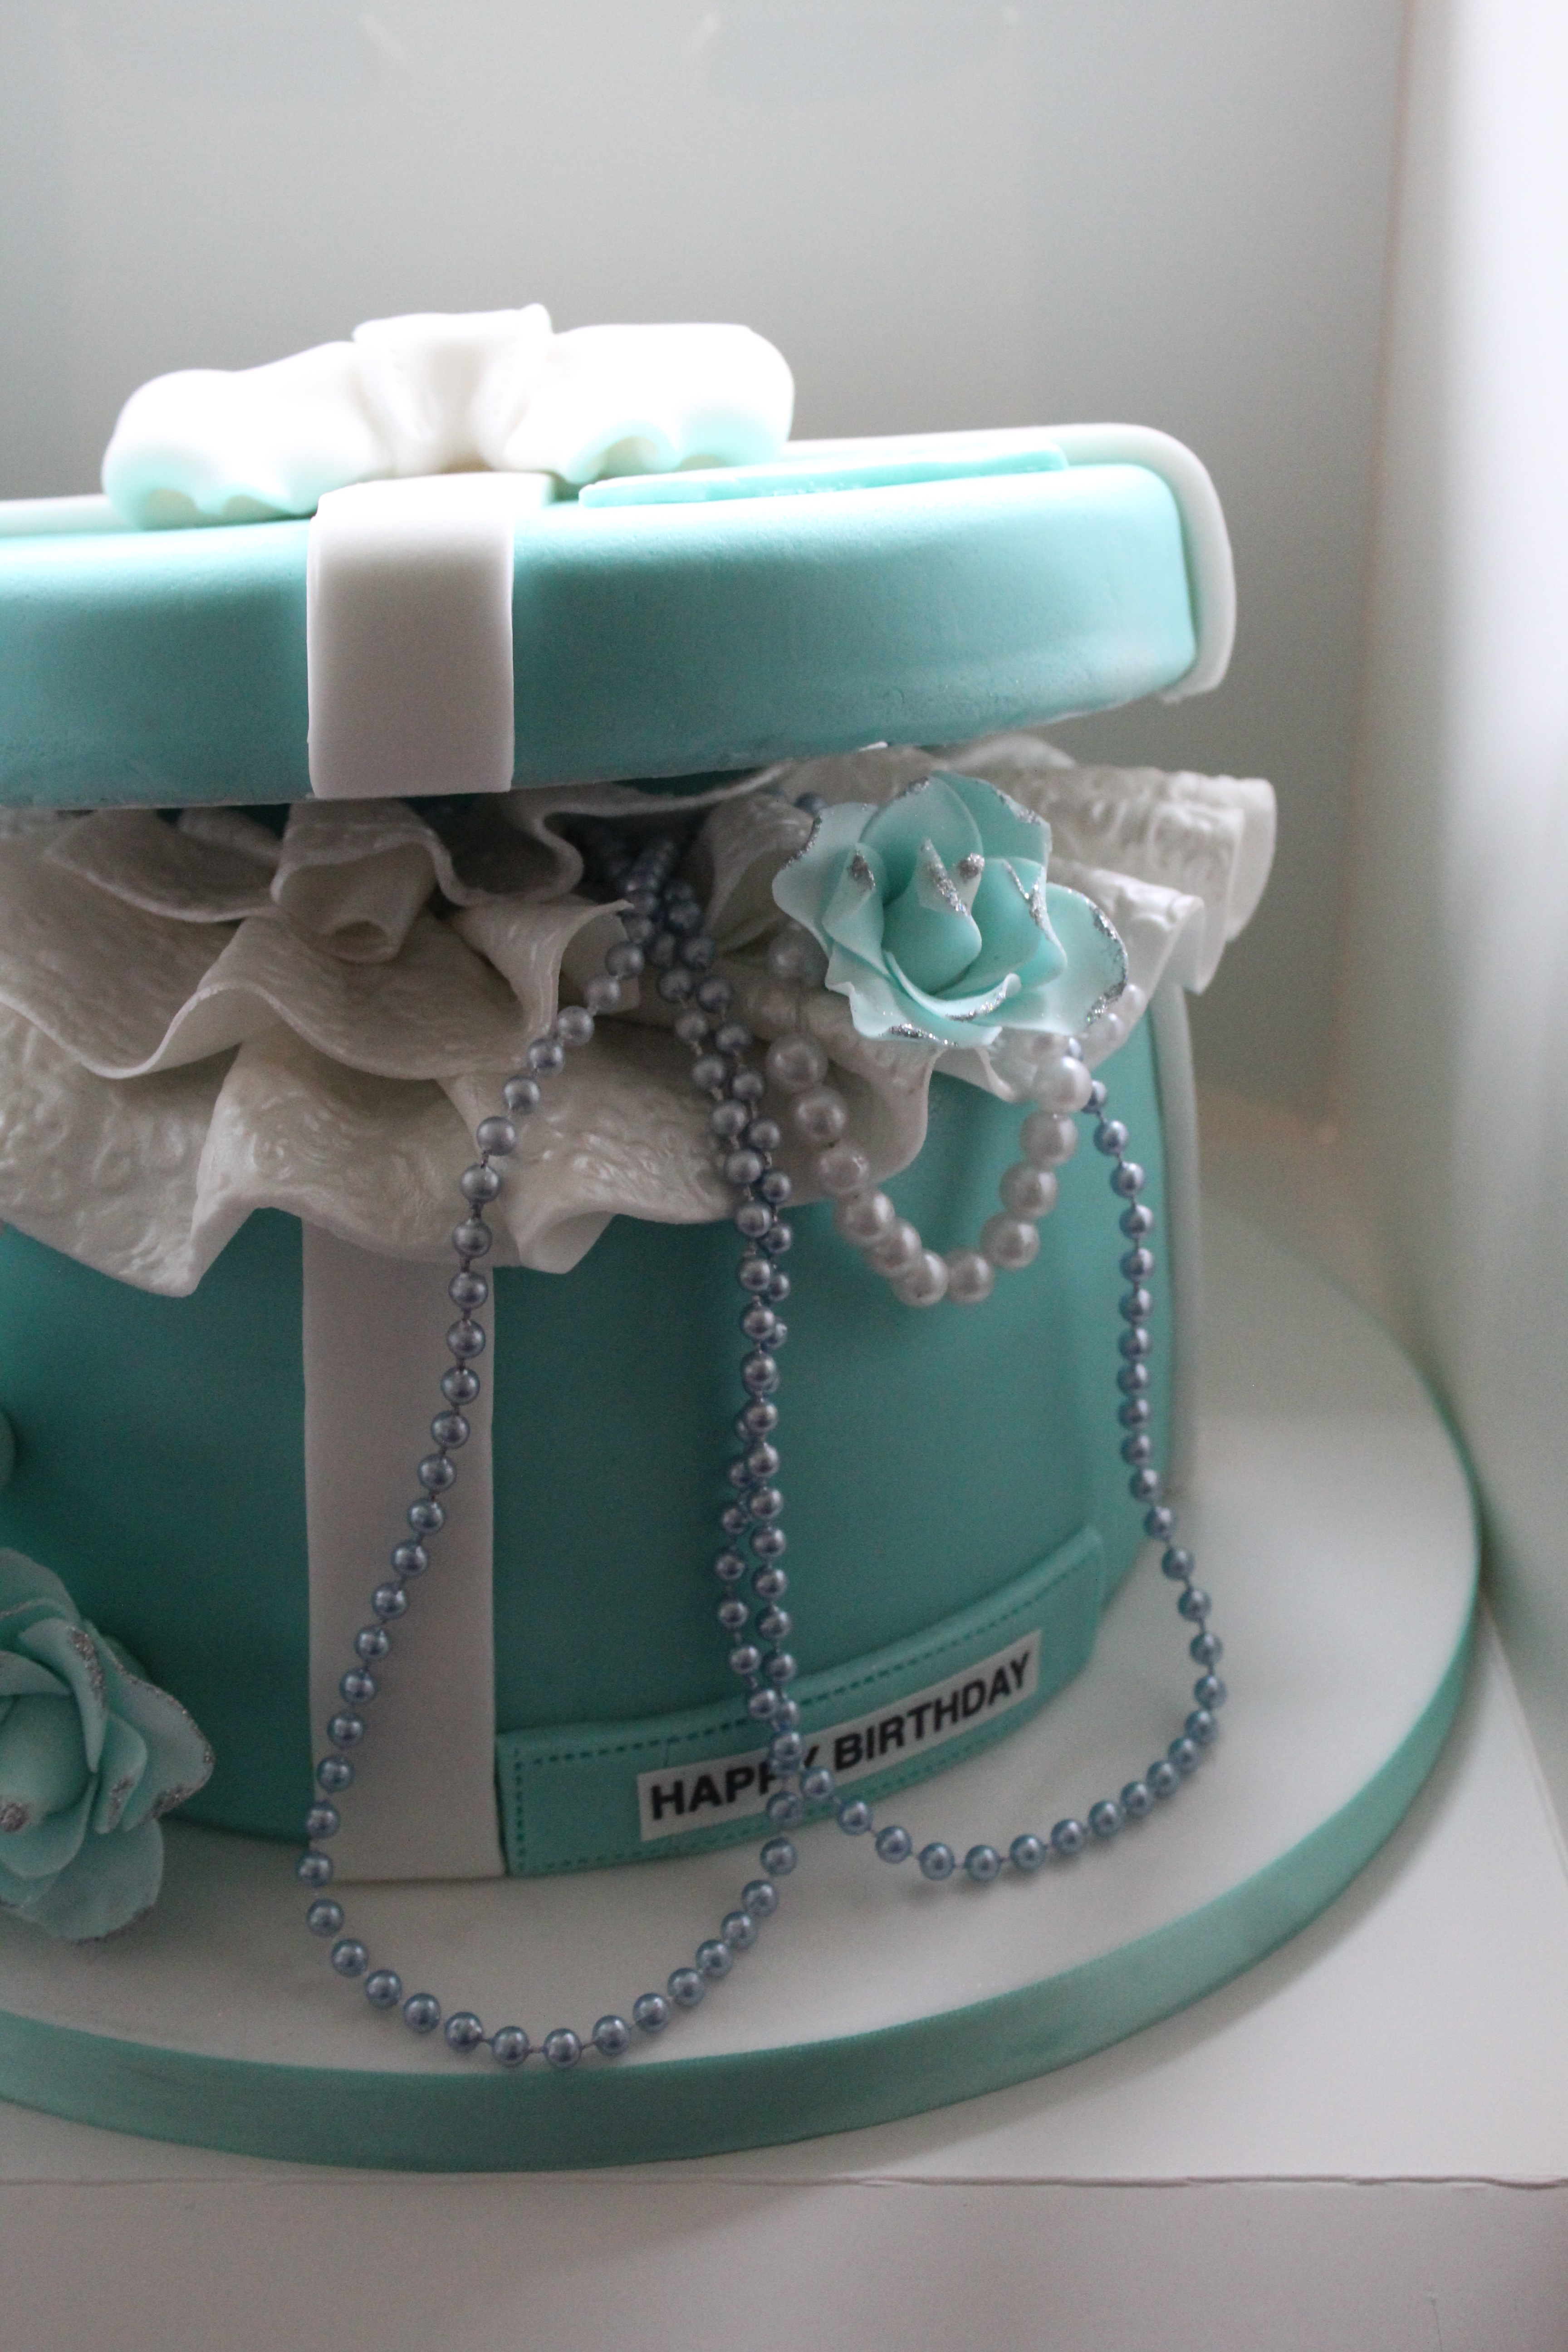 Tiffany Jewelry Box Cake